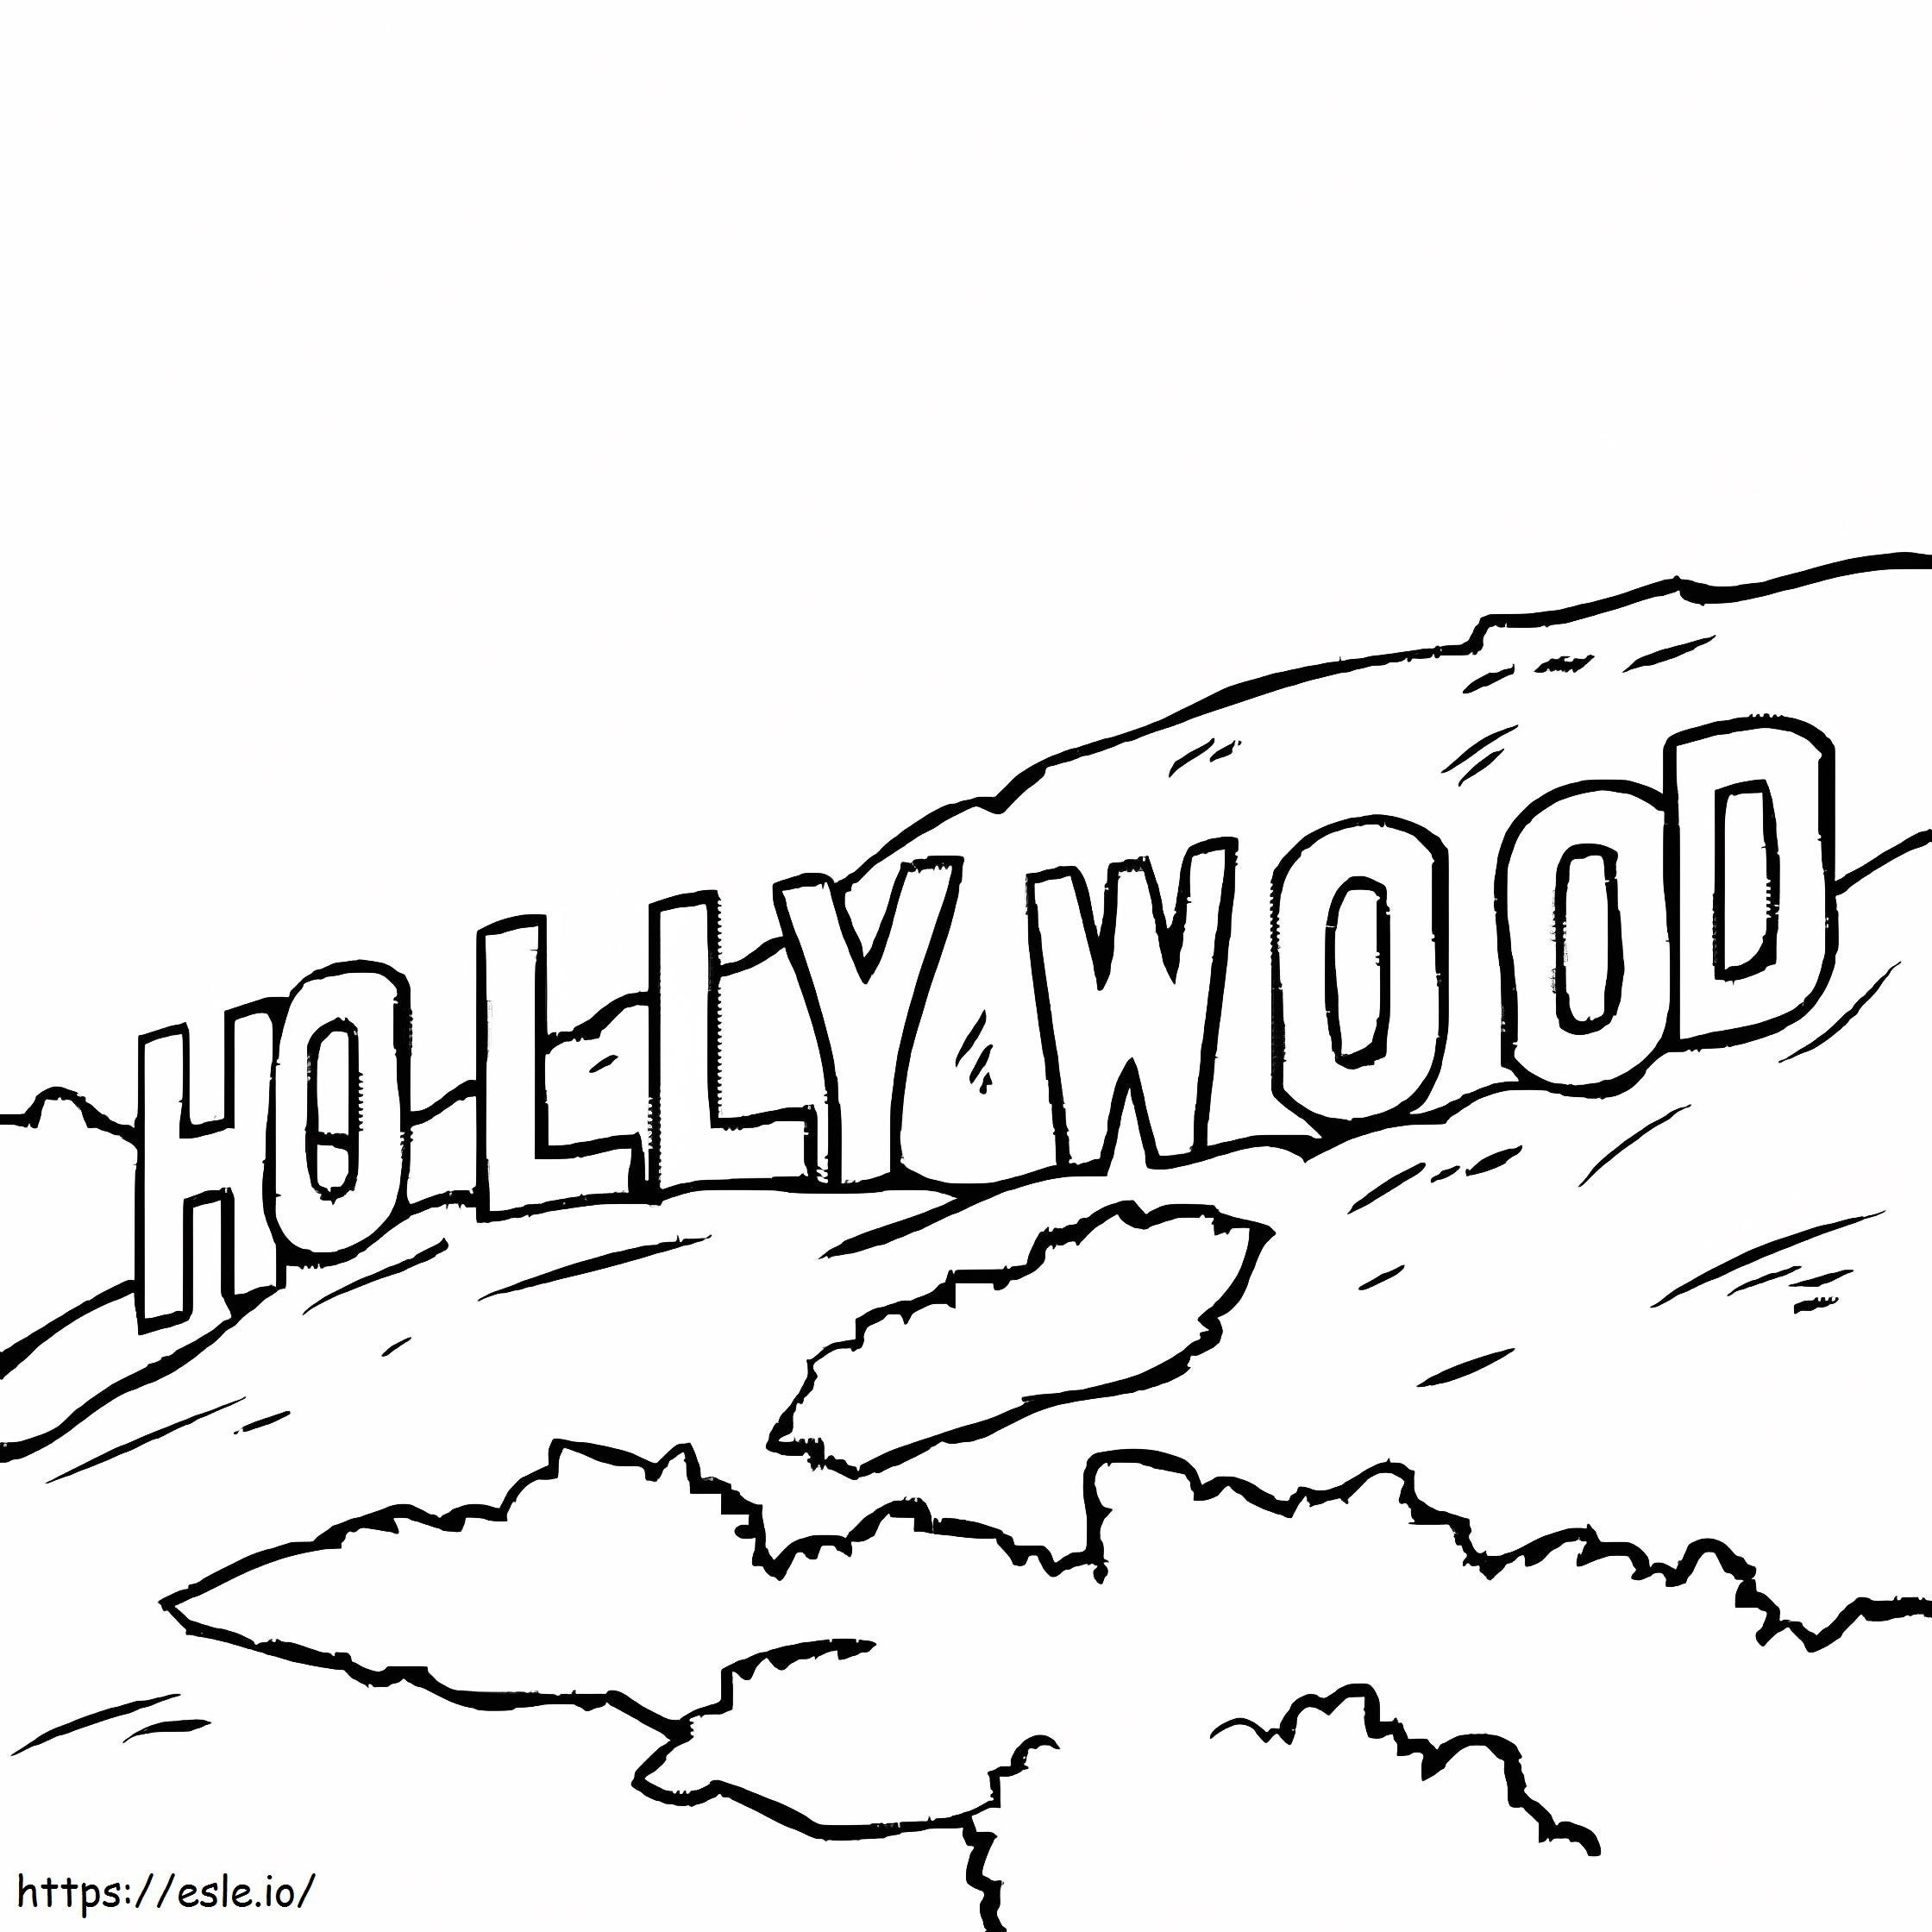 Hollywood'u Yazdır boyama